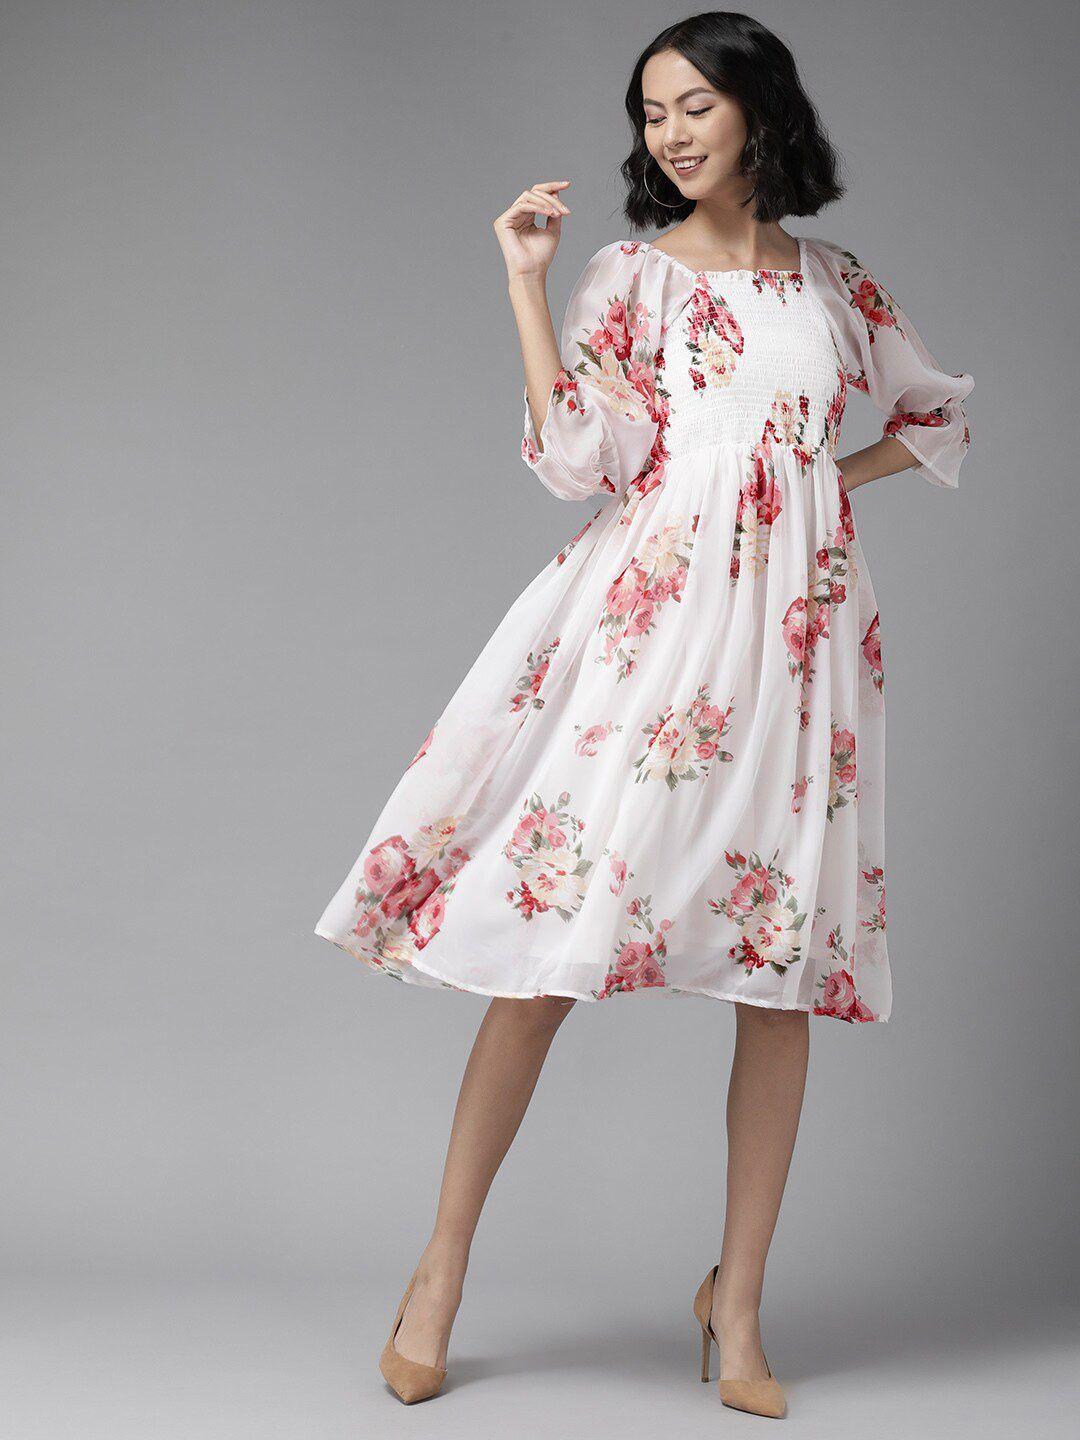 baesd-floral-printed-smocked-georgette-a-line-dress